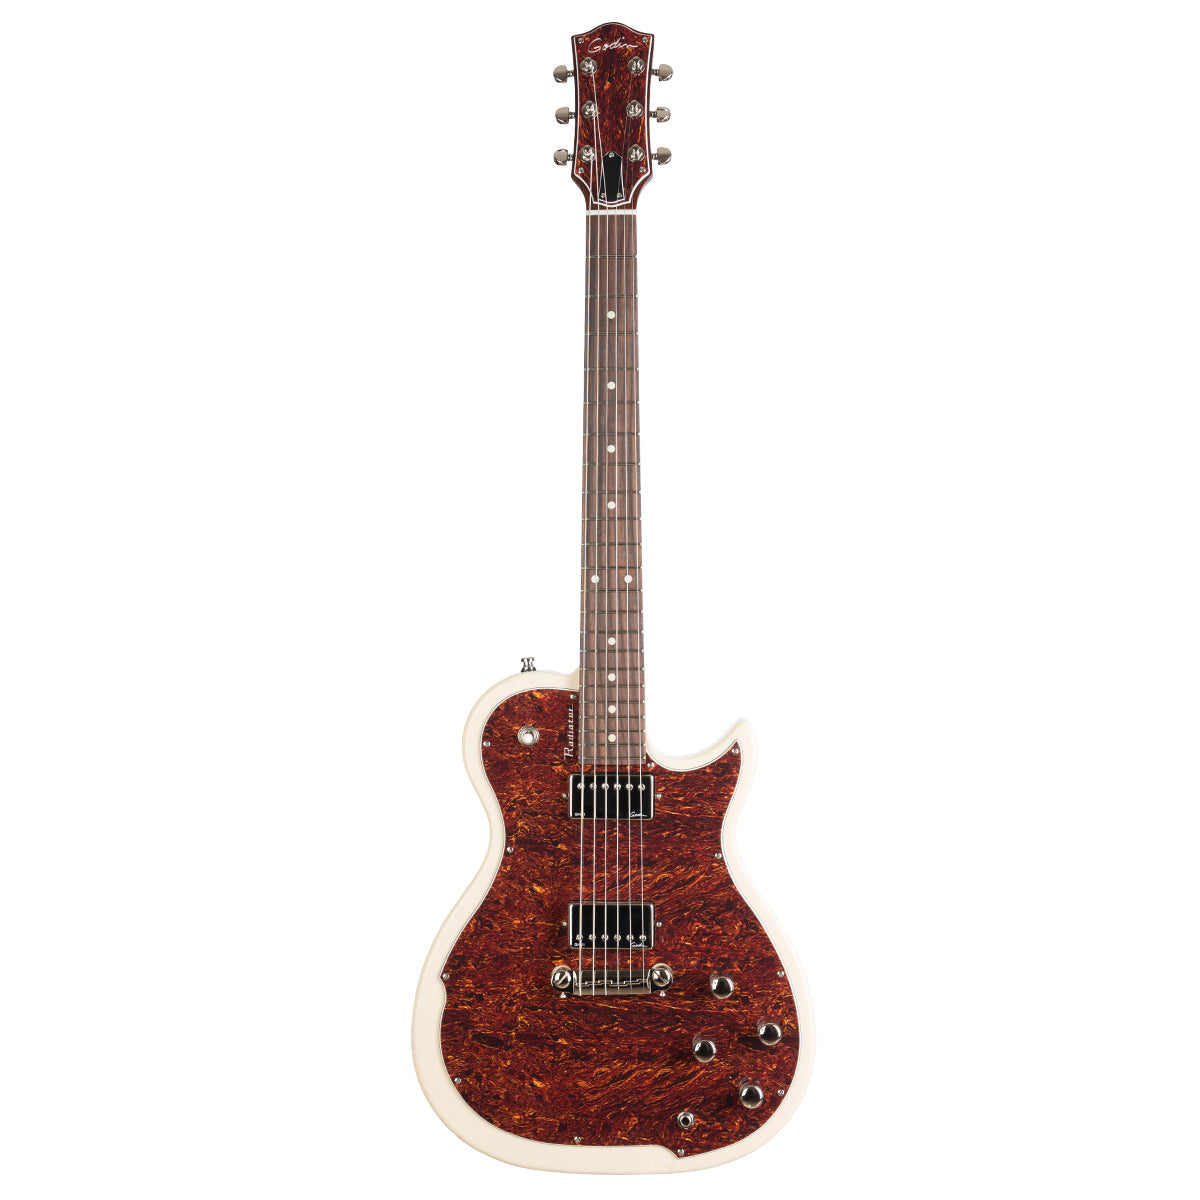 Godin Radiator Electric Guitar ~ Faded Cream RN, Electric Guitar for sale at Richards Guitars.